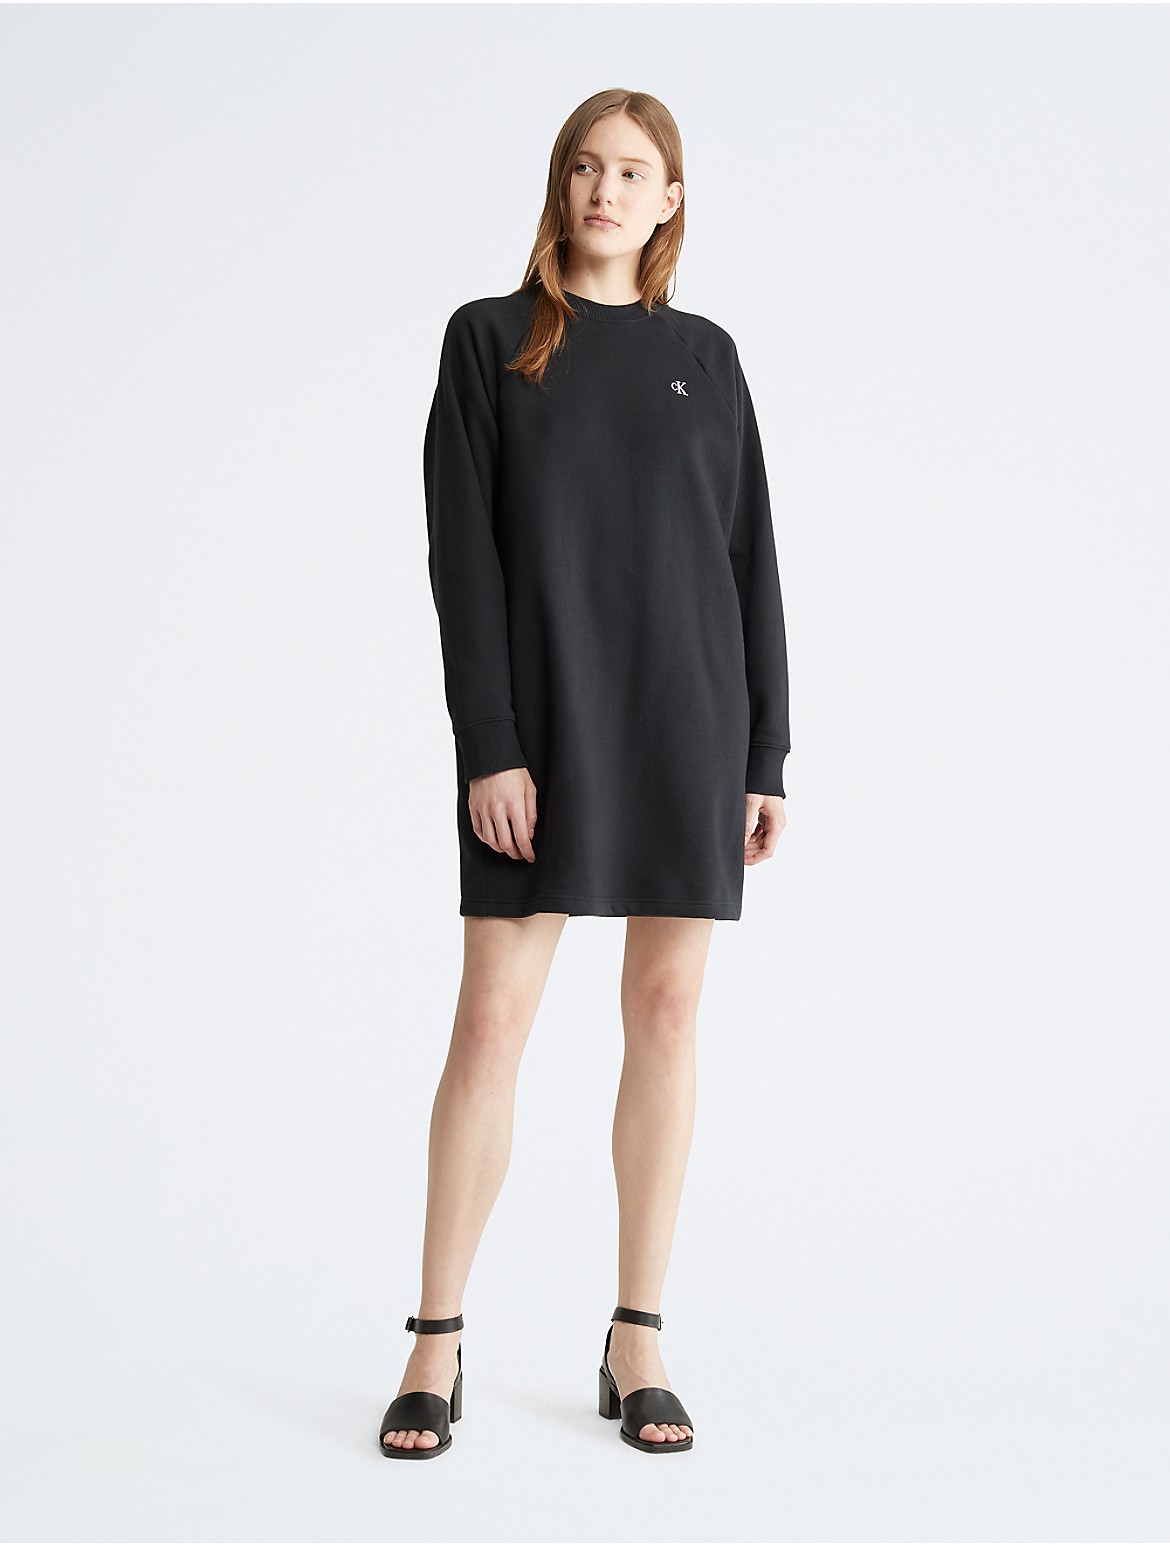 Calvin Klein Women's Archive Logo Fleece Sweatshirt Dress - Black - S